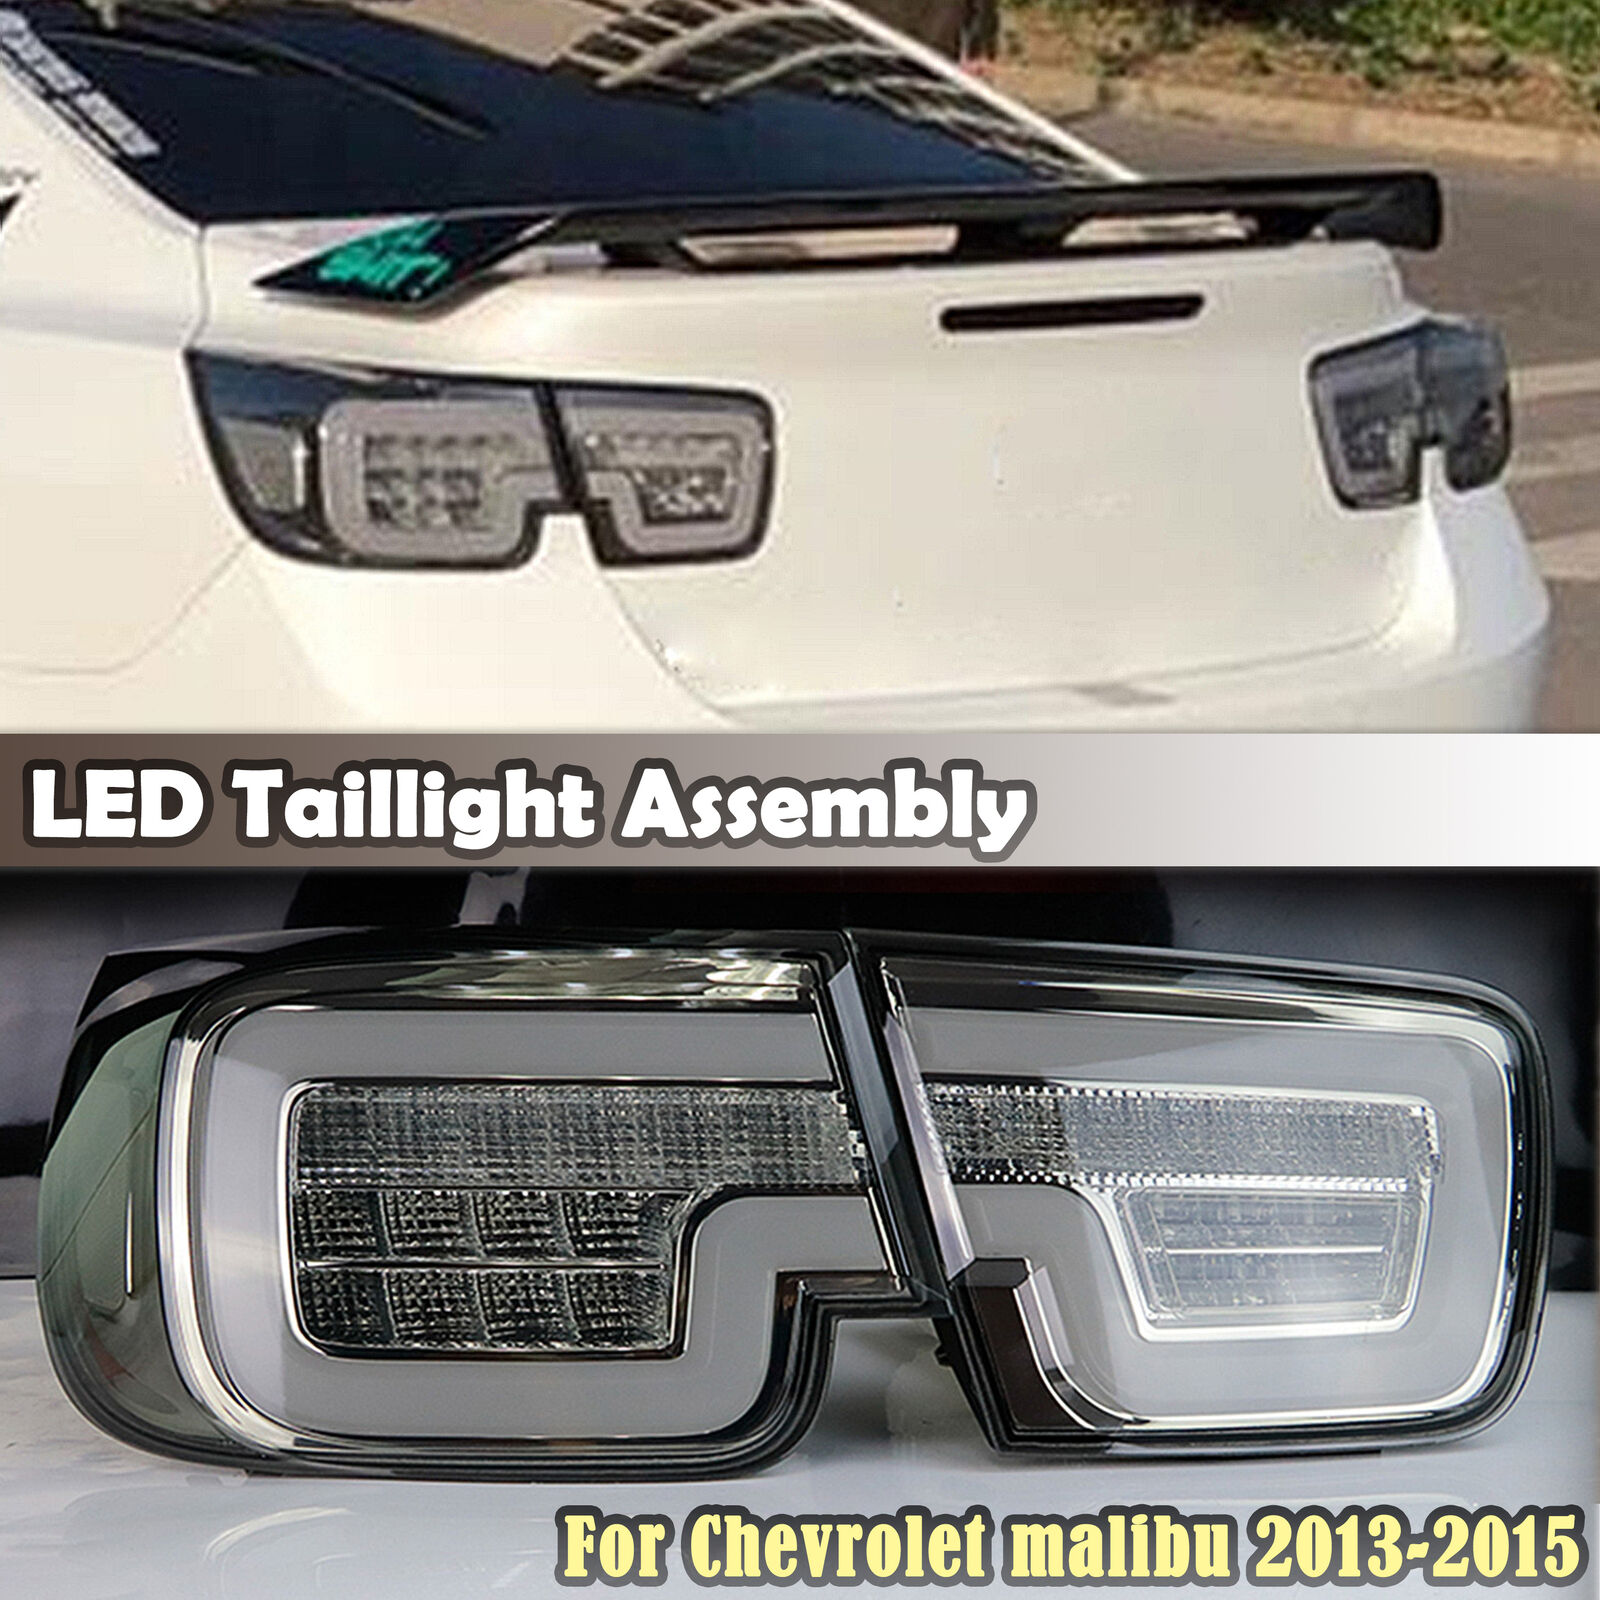 For Chevrolet Malibu LED Taillight Rear Lamp Assembly 2013 2014 2015 Black DNN